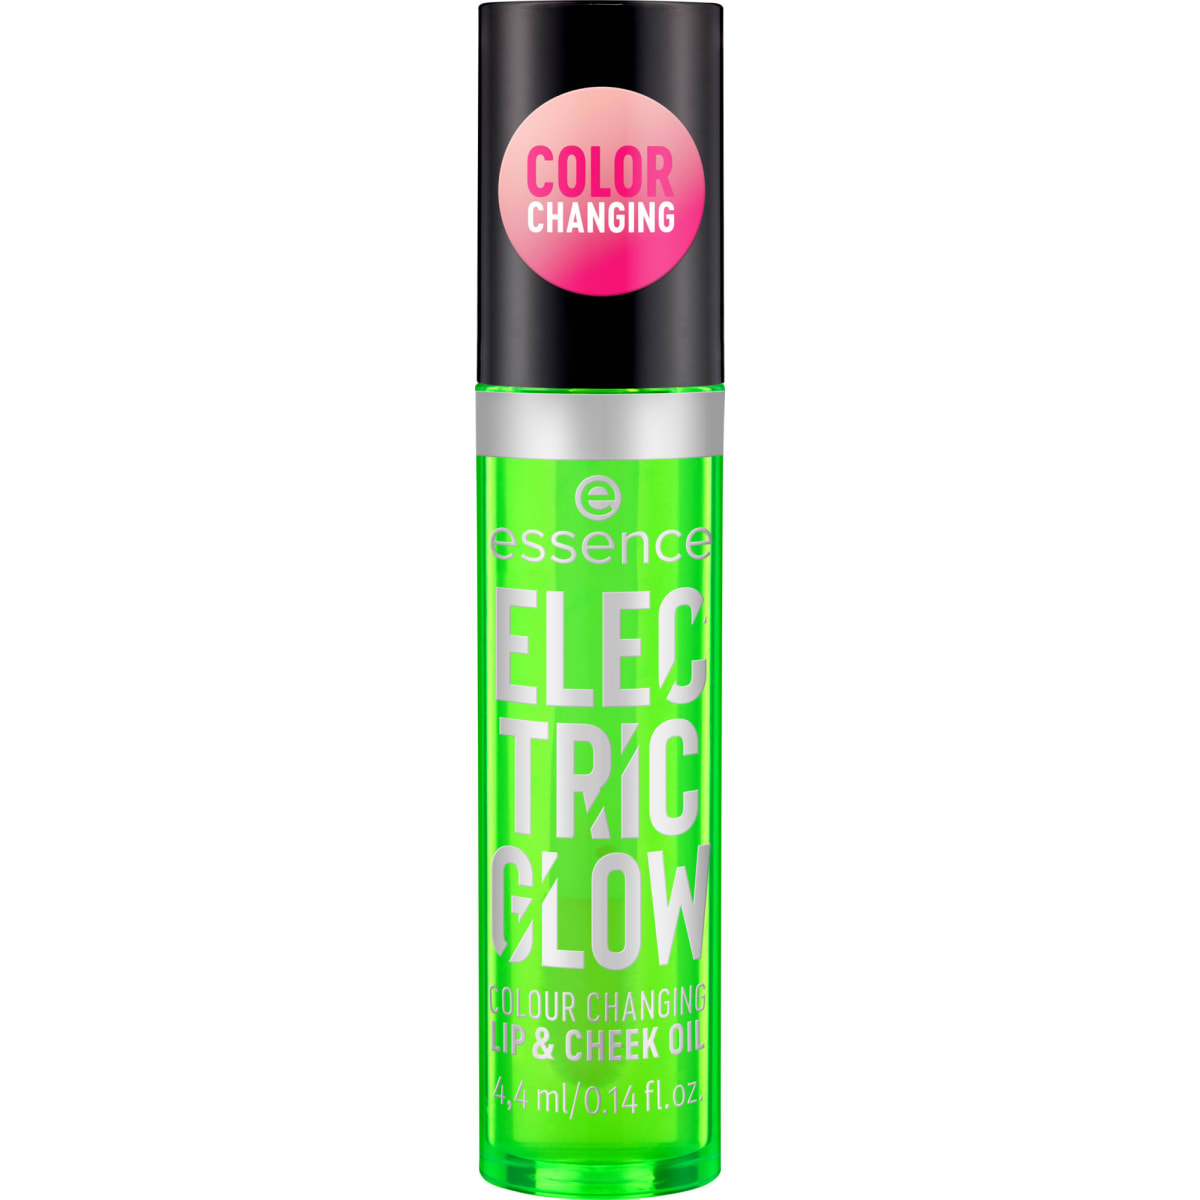 Essence Electric Glow Colour Changing Lip & Cheek Oil 4,4 ml korostusväri |   verkkokauppa